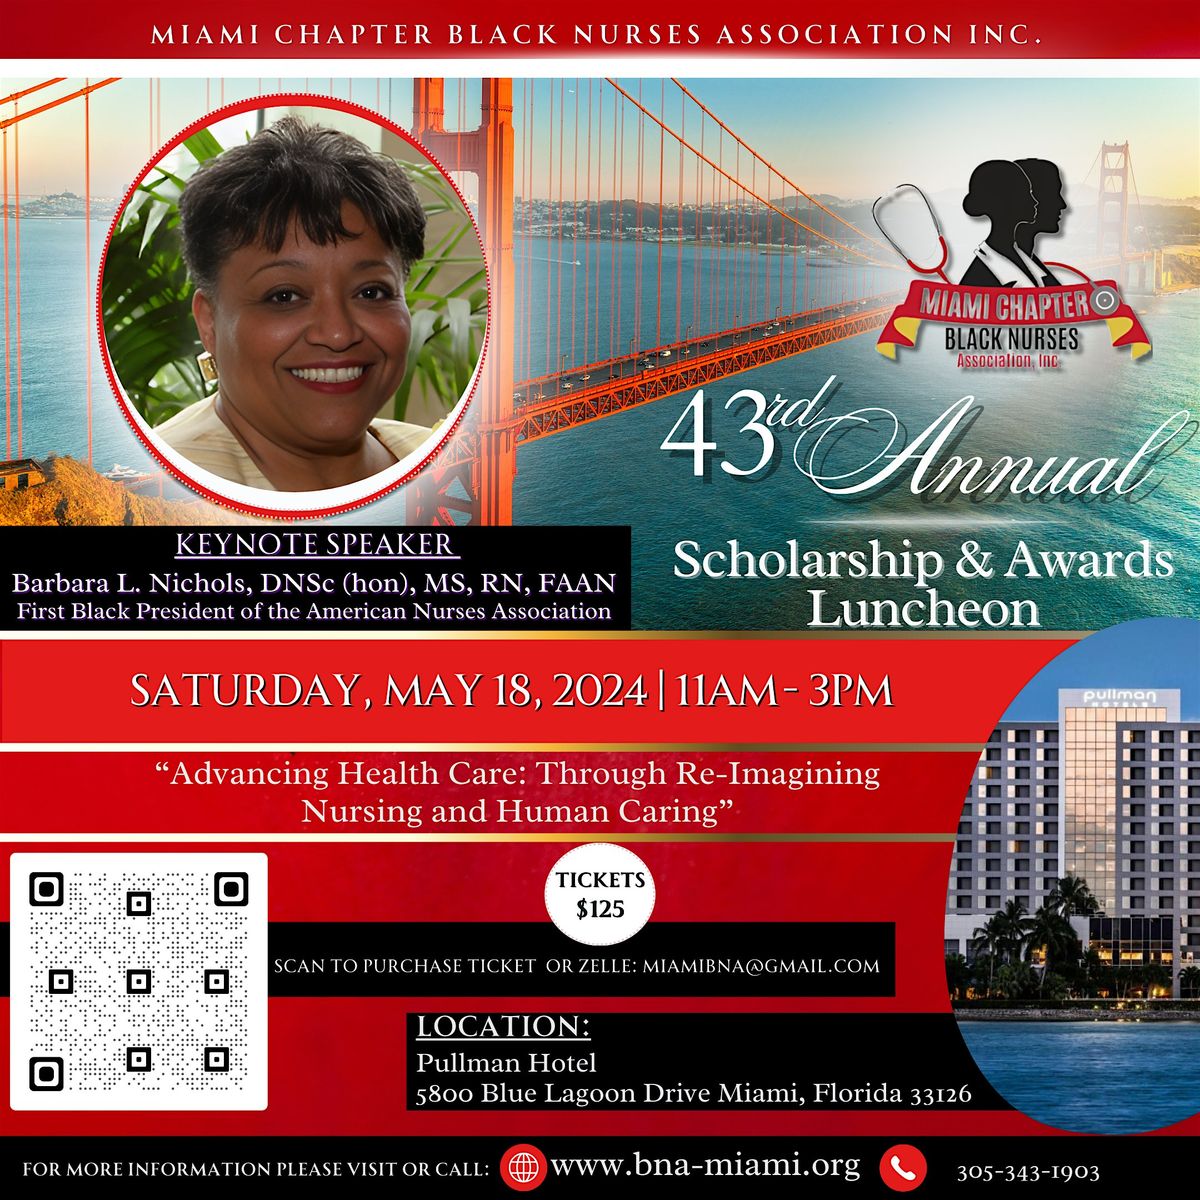 Miami Chapter Black Nurses Association 43rd Annual Scholarship & Awards